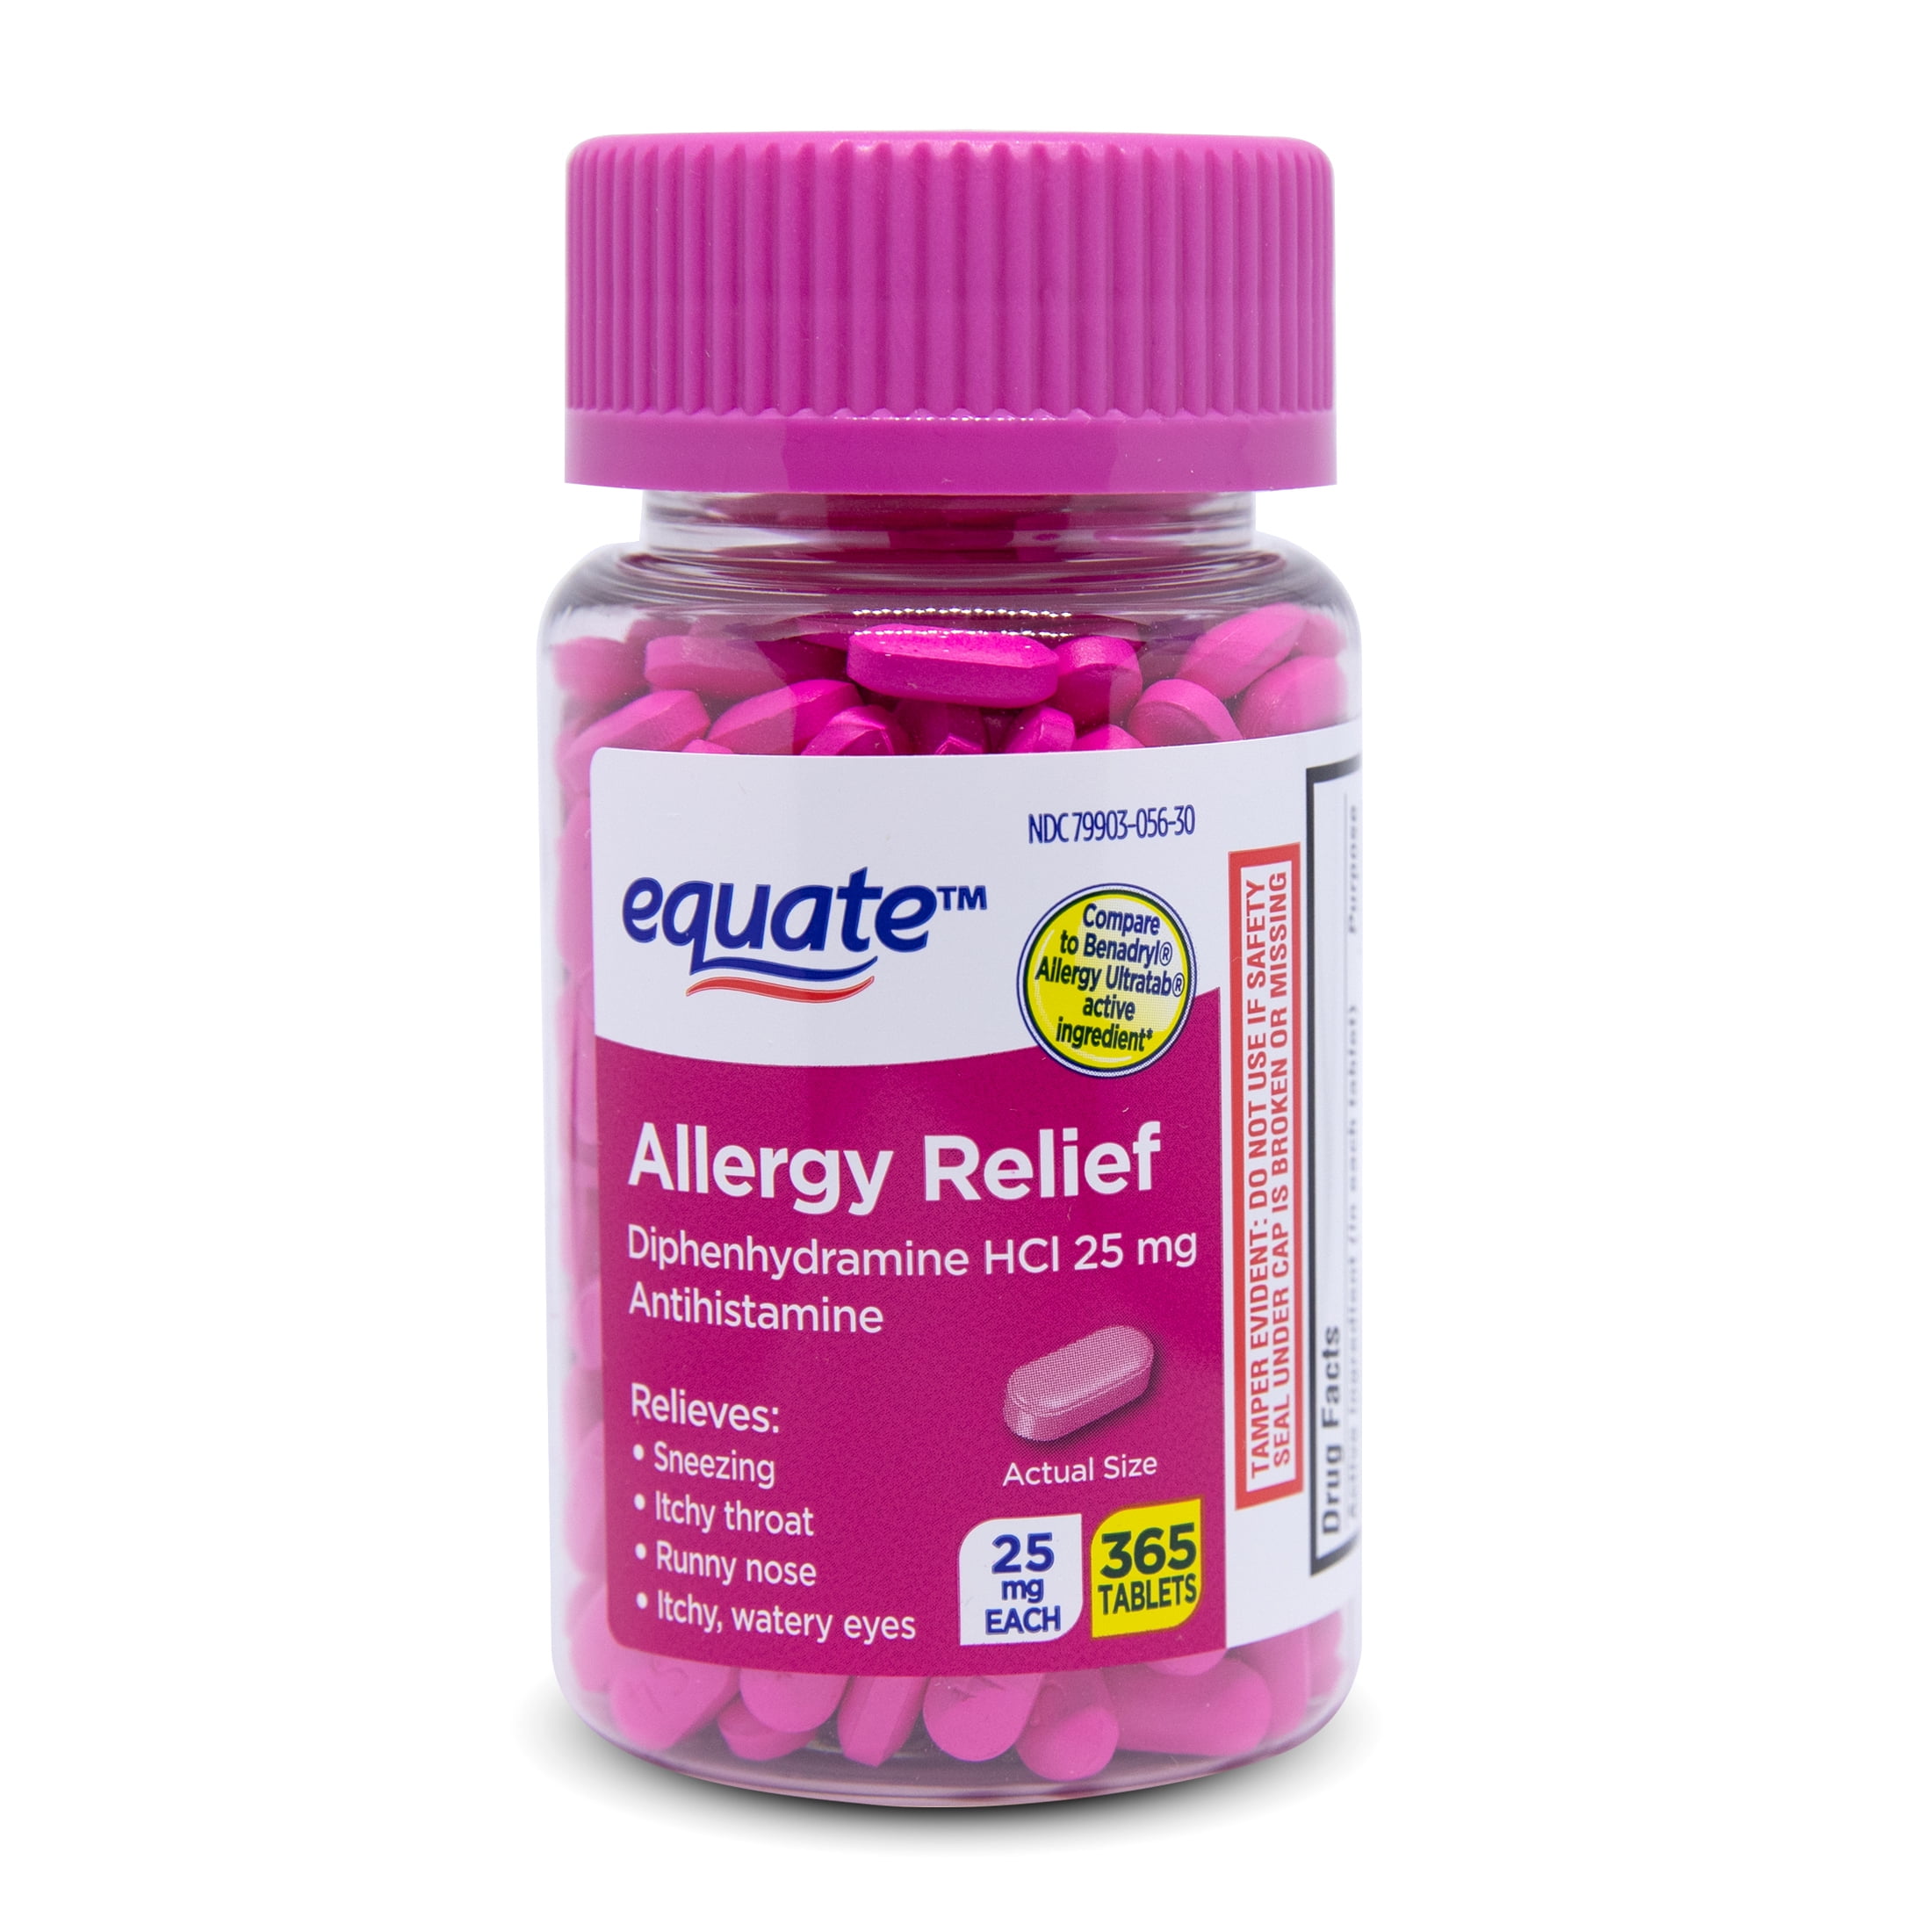 allergy medicine first aid